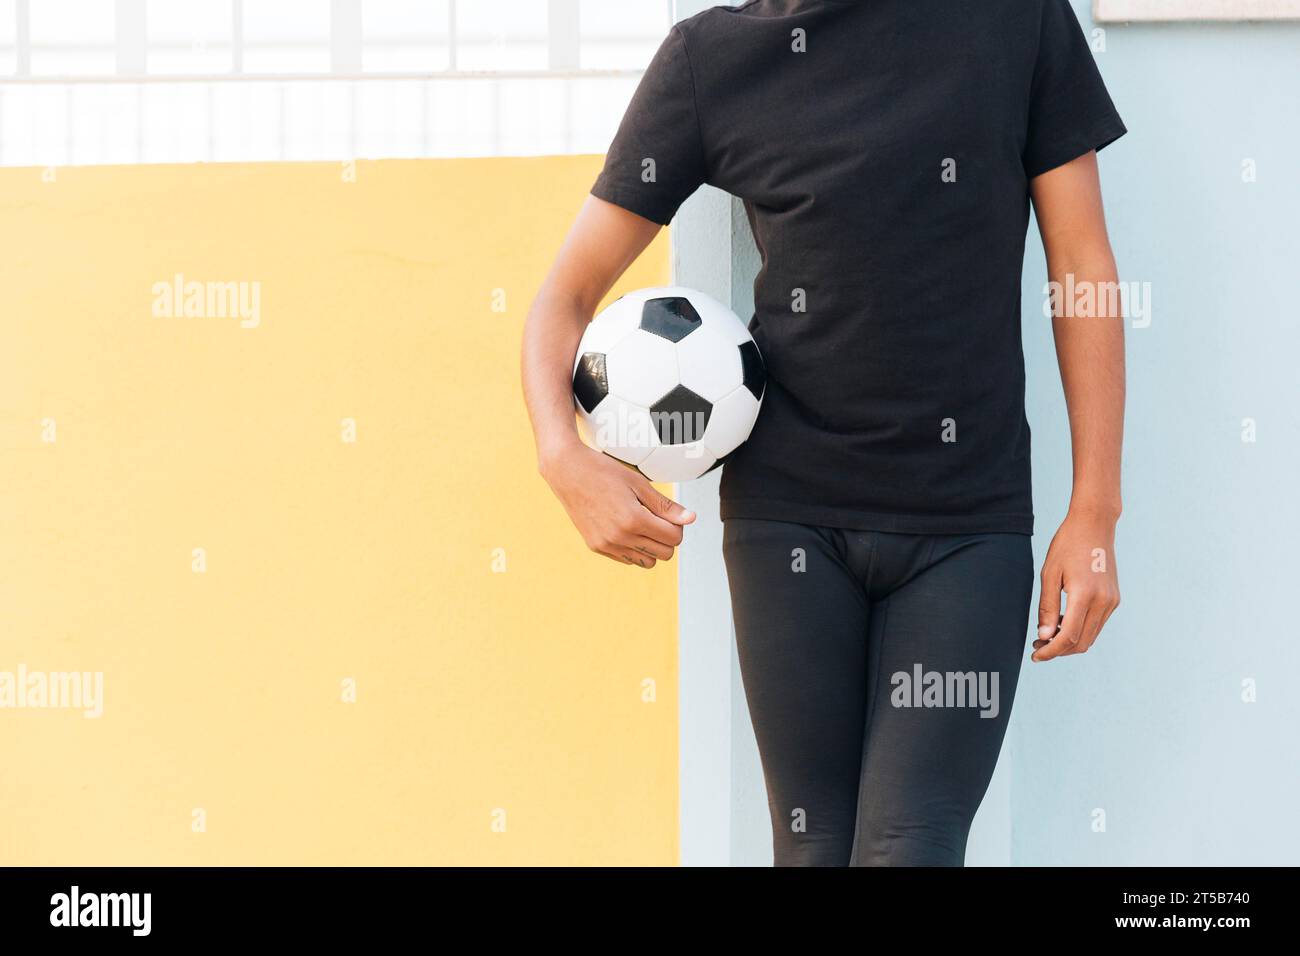 Beschneiden schwarzen Mann, der Fußball hält Stockfoto